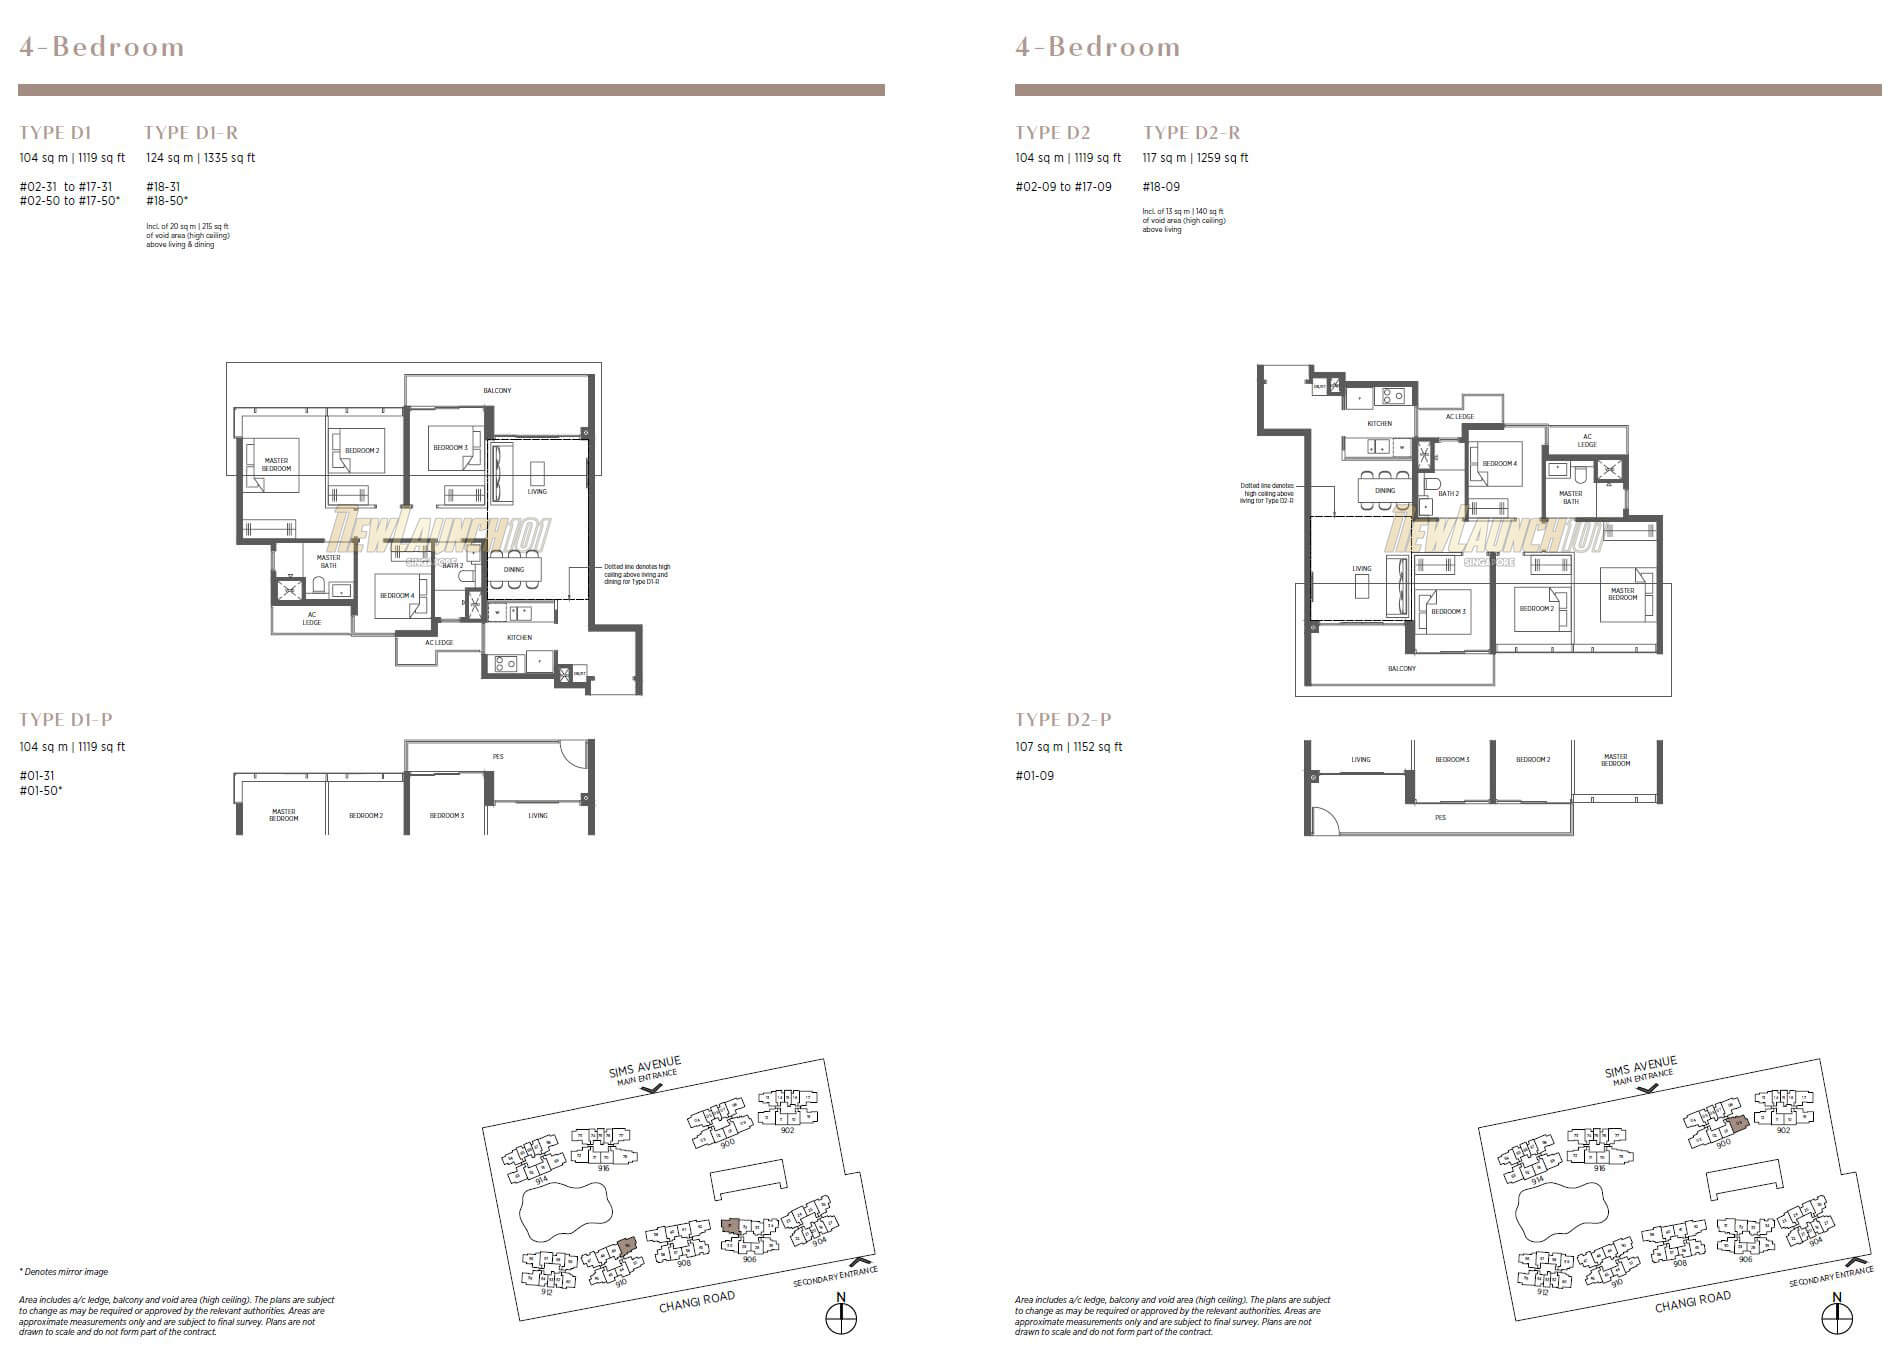 Parc Esta Floor Plan 4-Bedroom